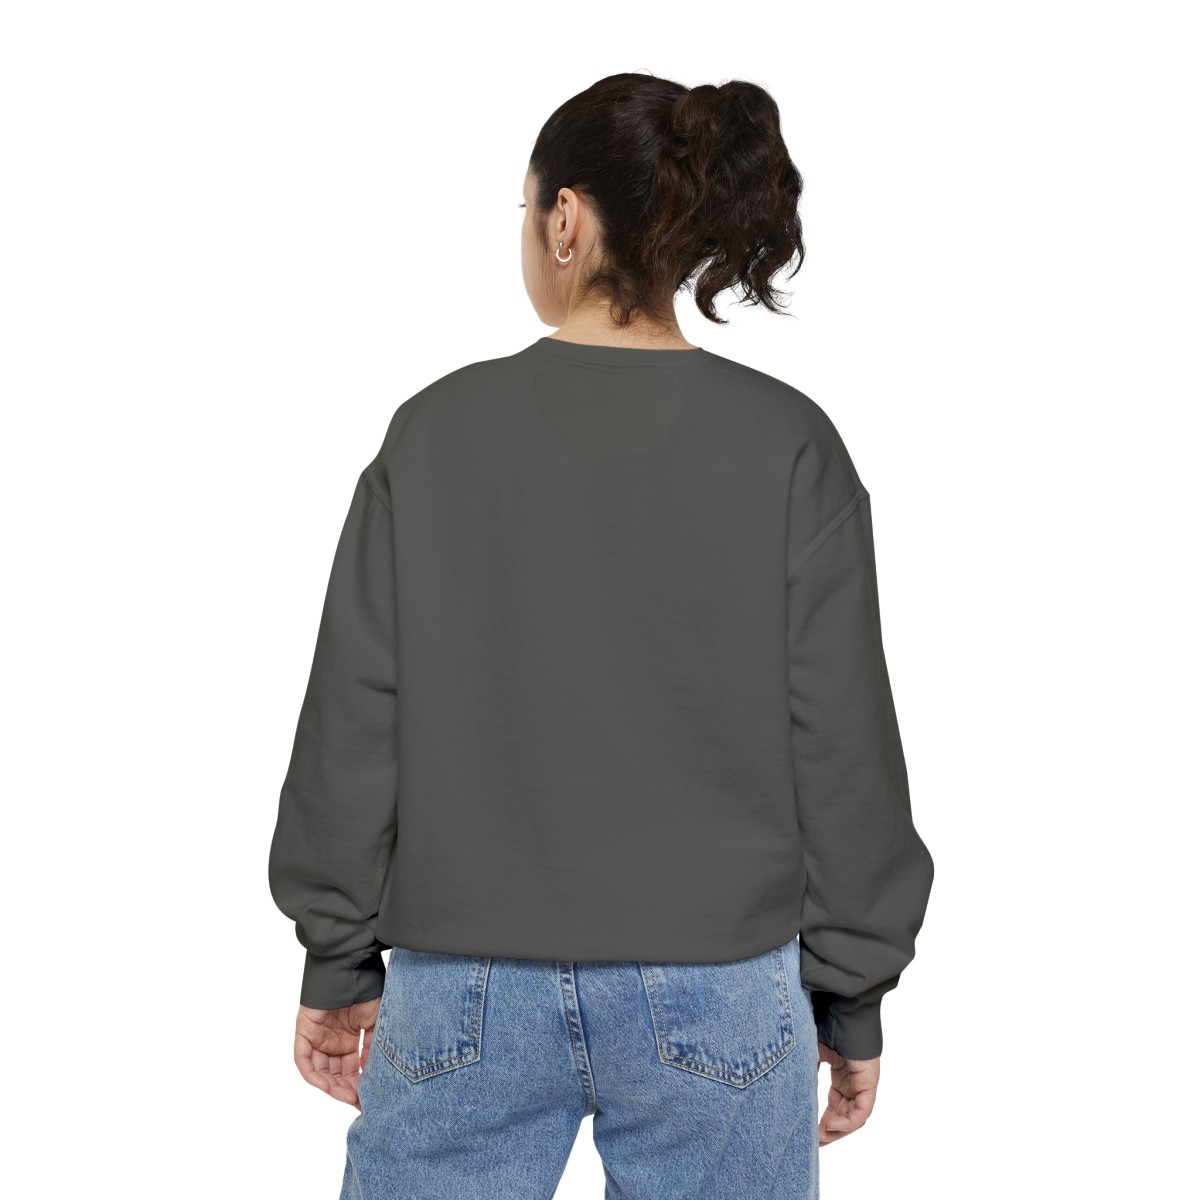 Finding a Better Way (Unisex Garment-Dyed Sweatshirt) product thumbnail image